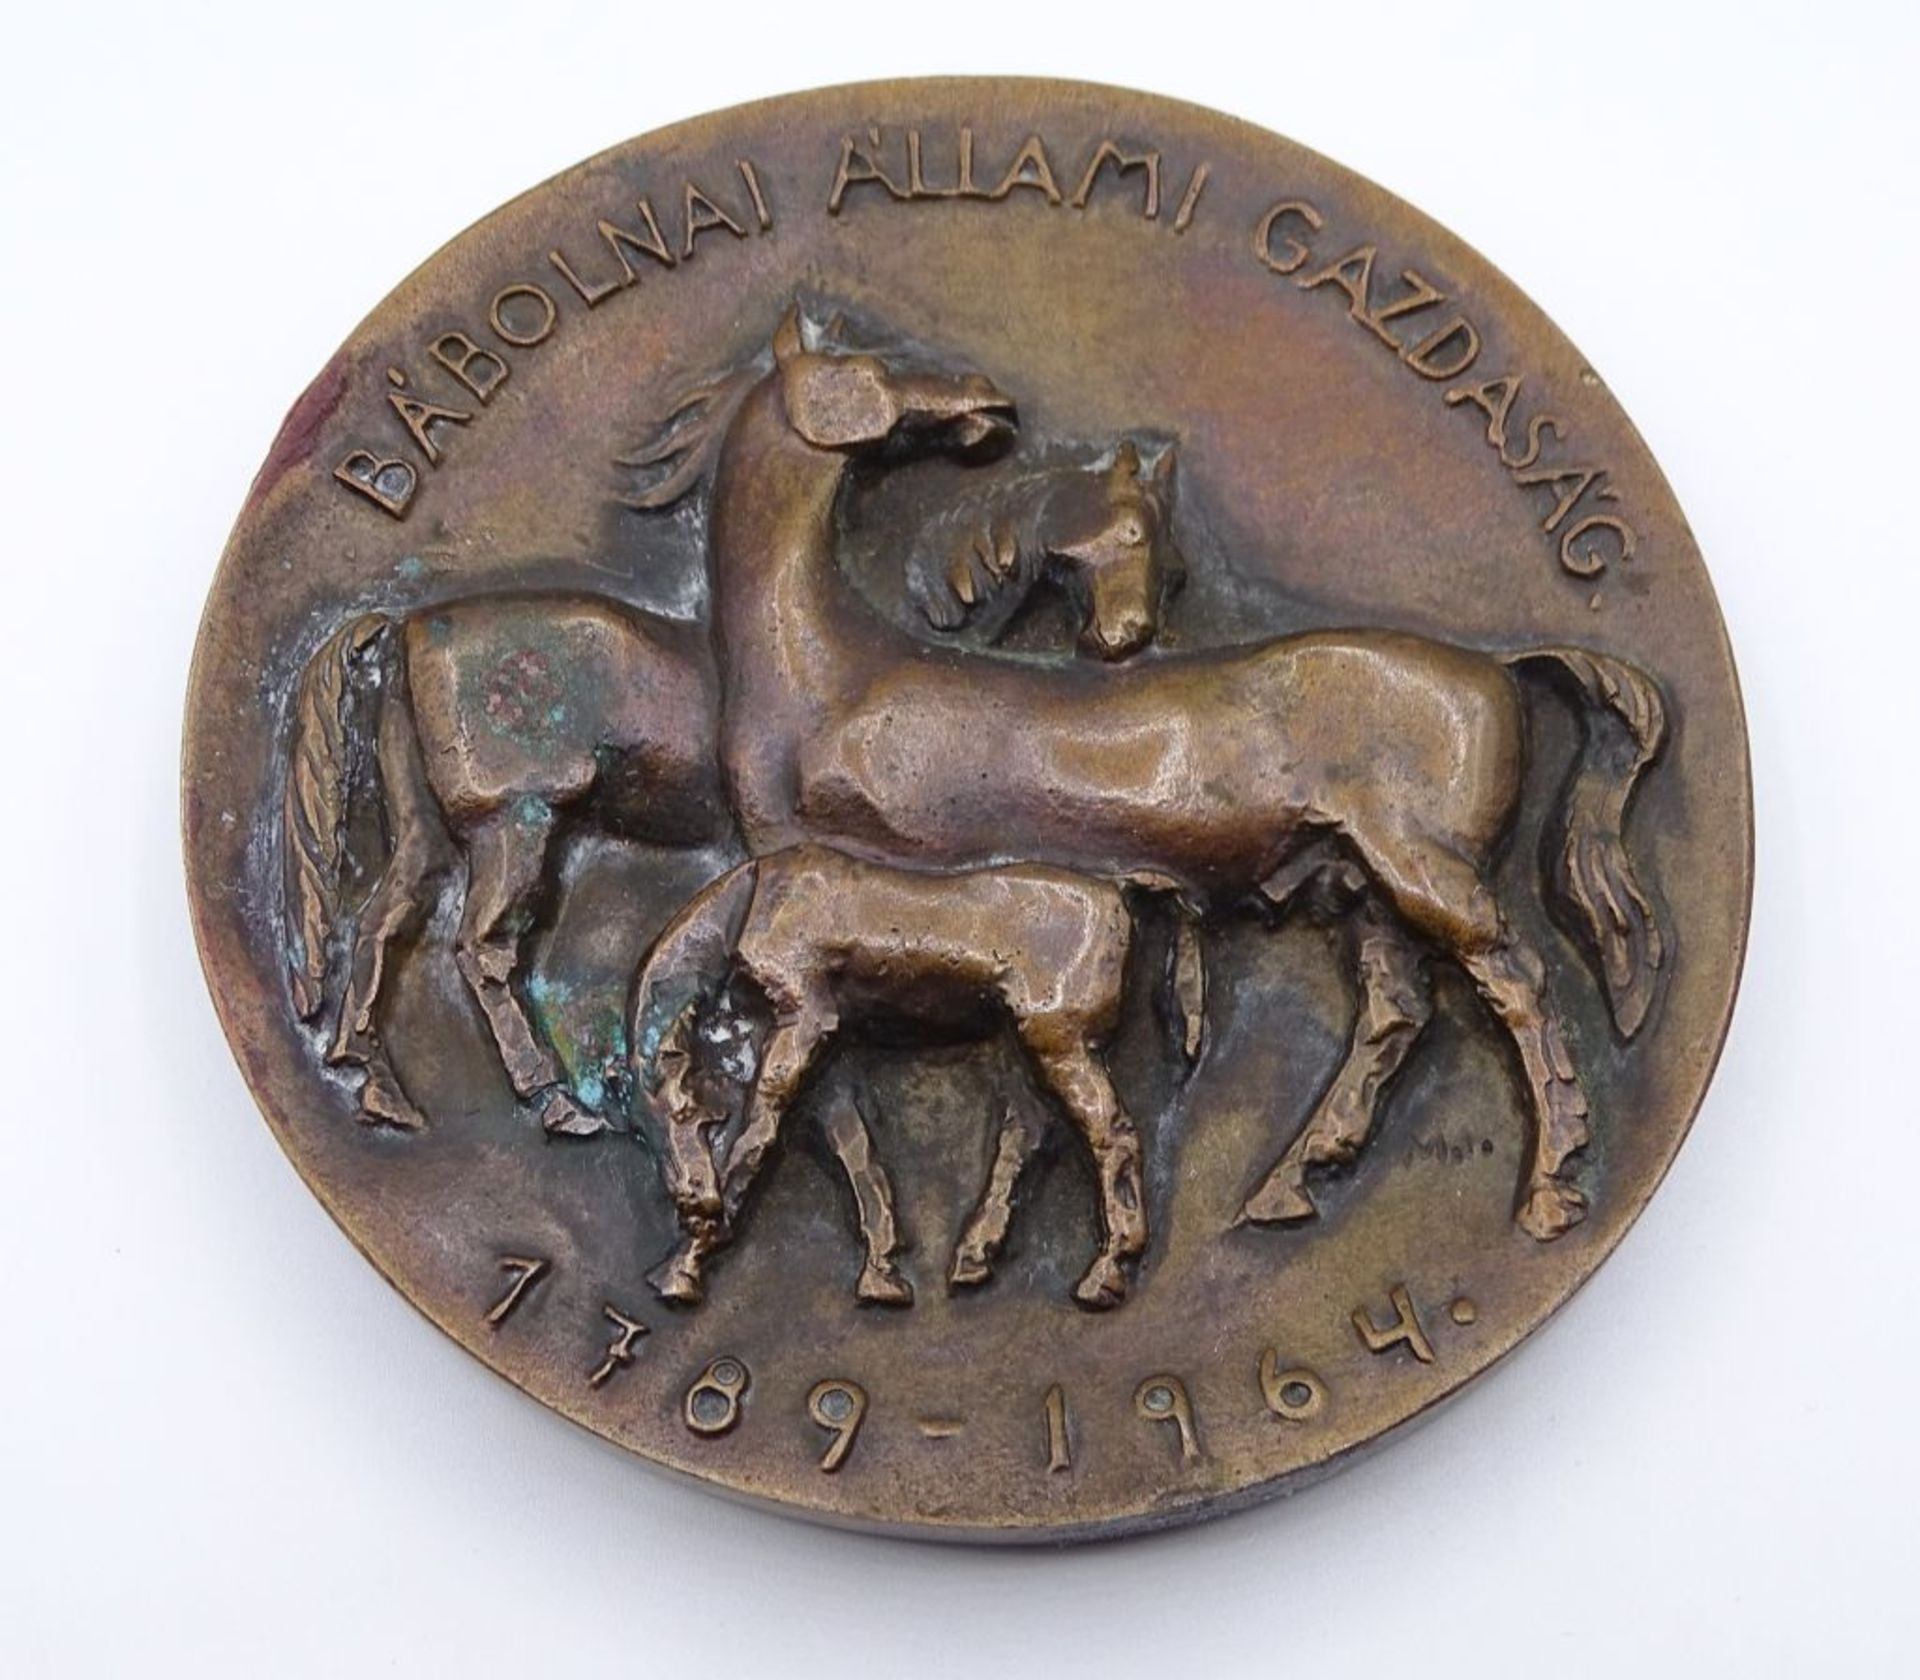 Bronze Plakette Babolnaj Allami Gazdasag 1789-1964,d-9,0cm- - -22.61 % buyer's premium on the hammer